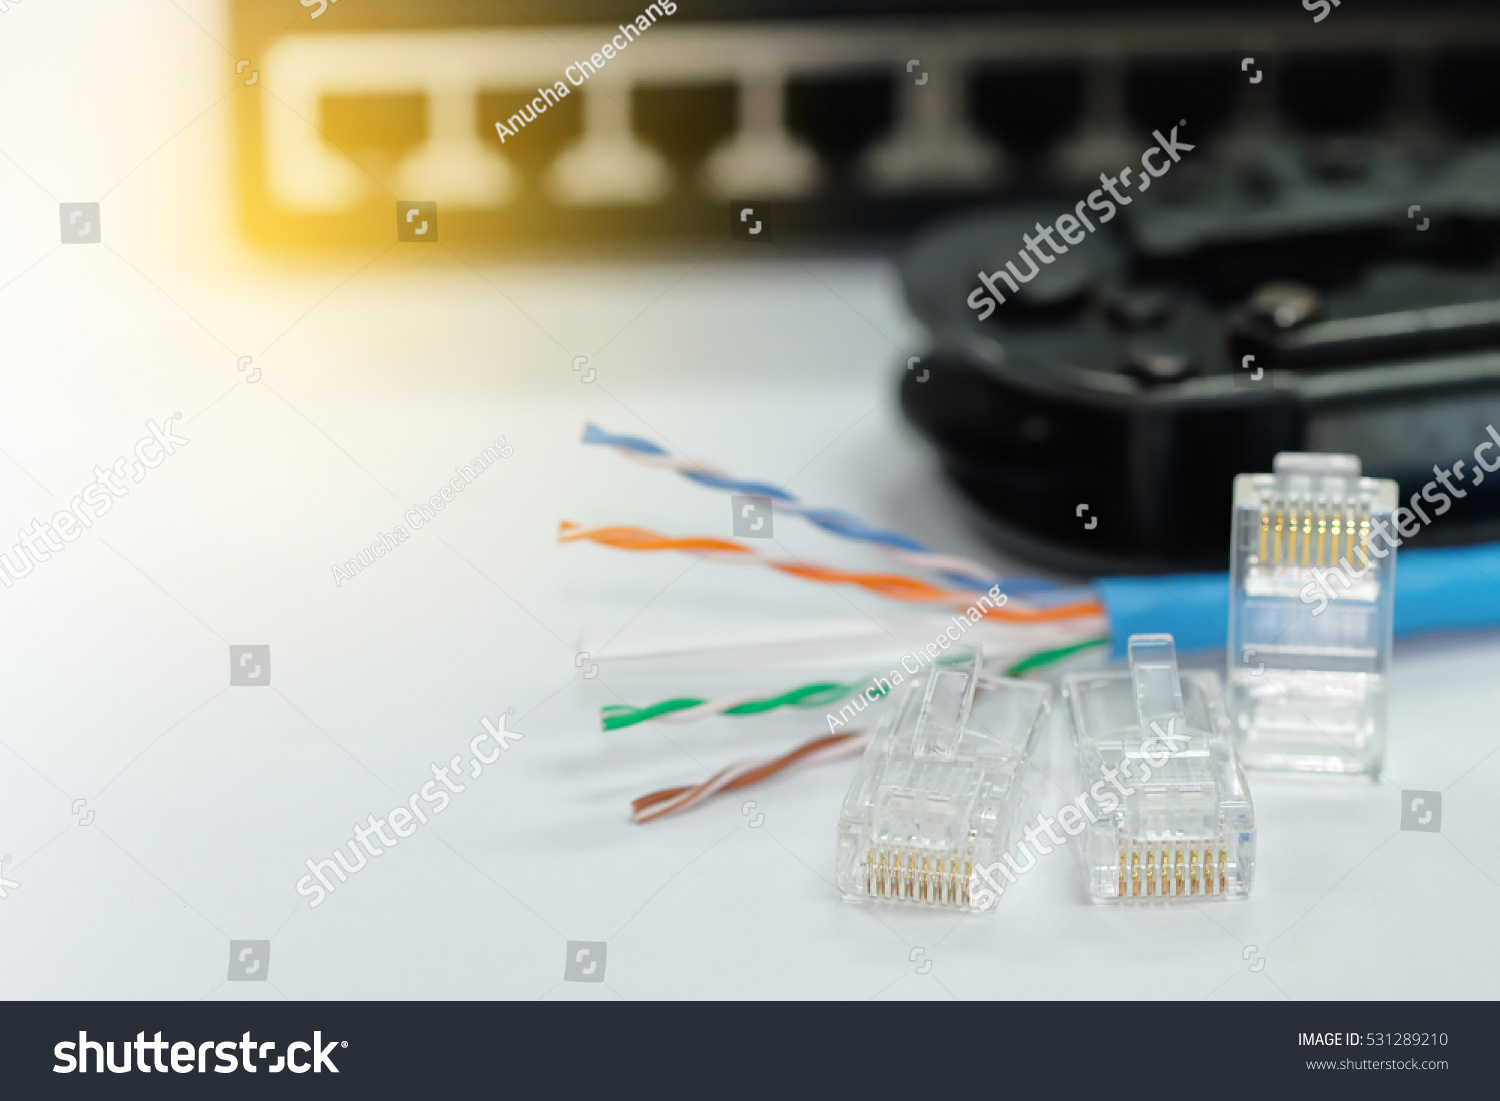 Rj45 Plug Network Cable Blur Tool Stock Photo 531289210 Shutterstock